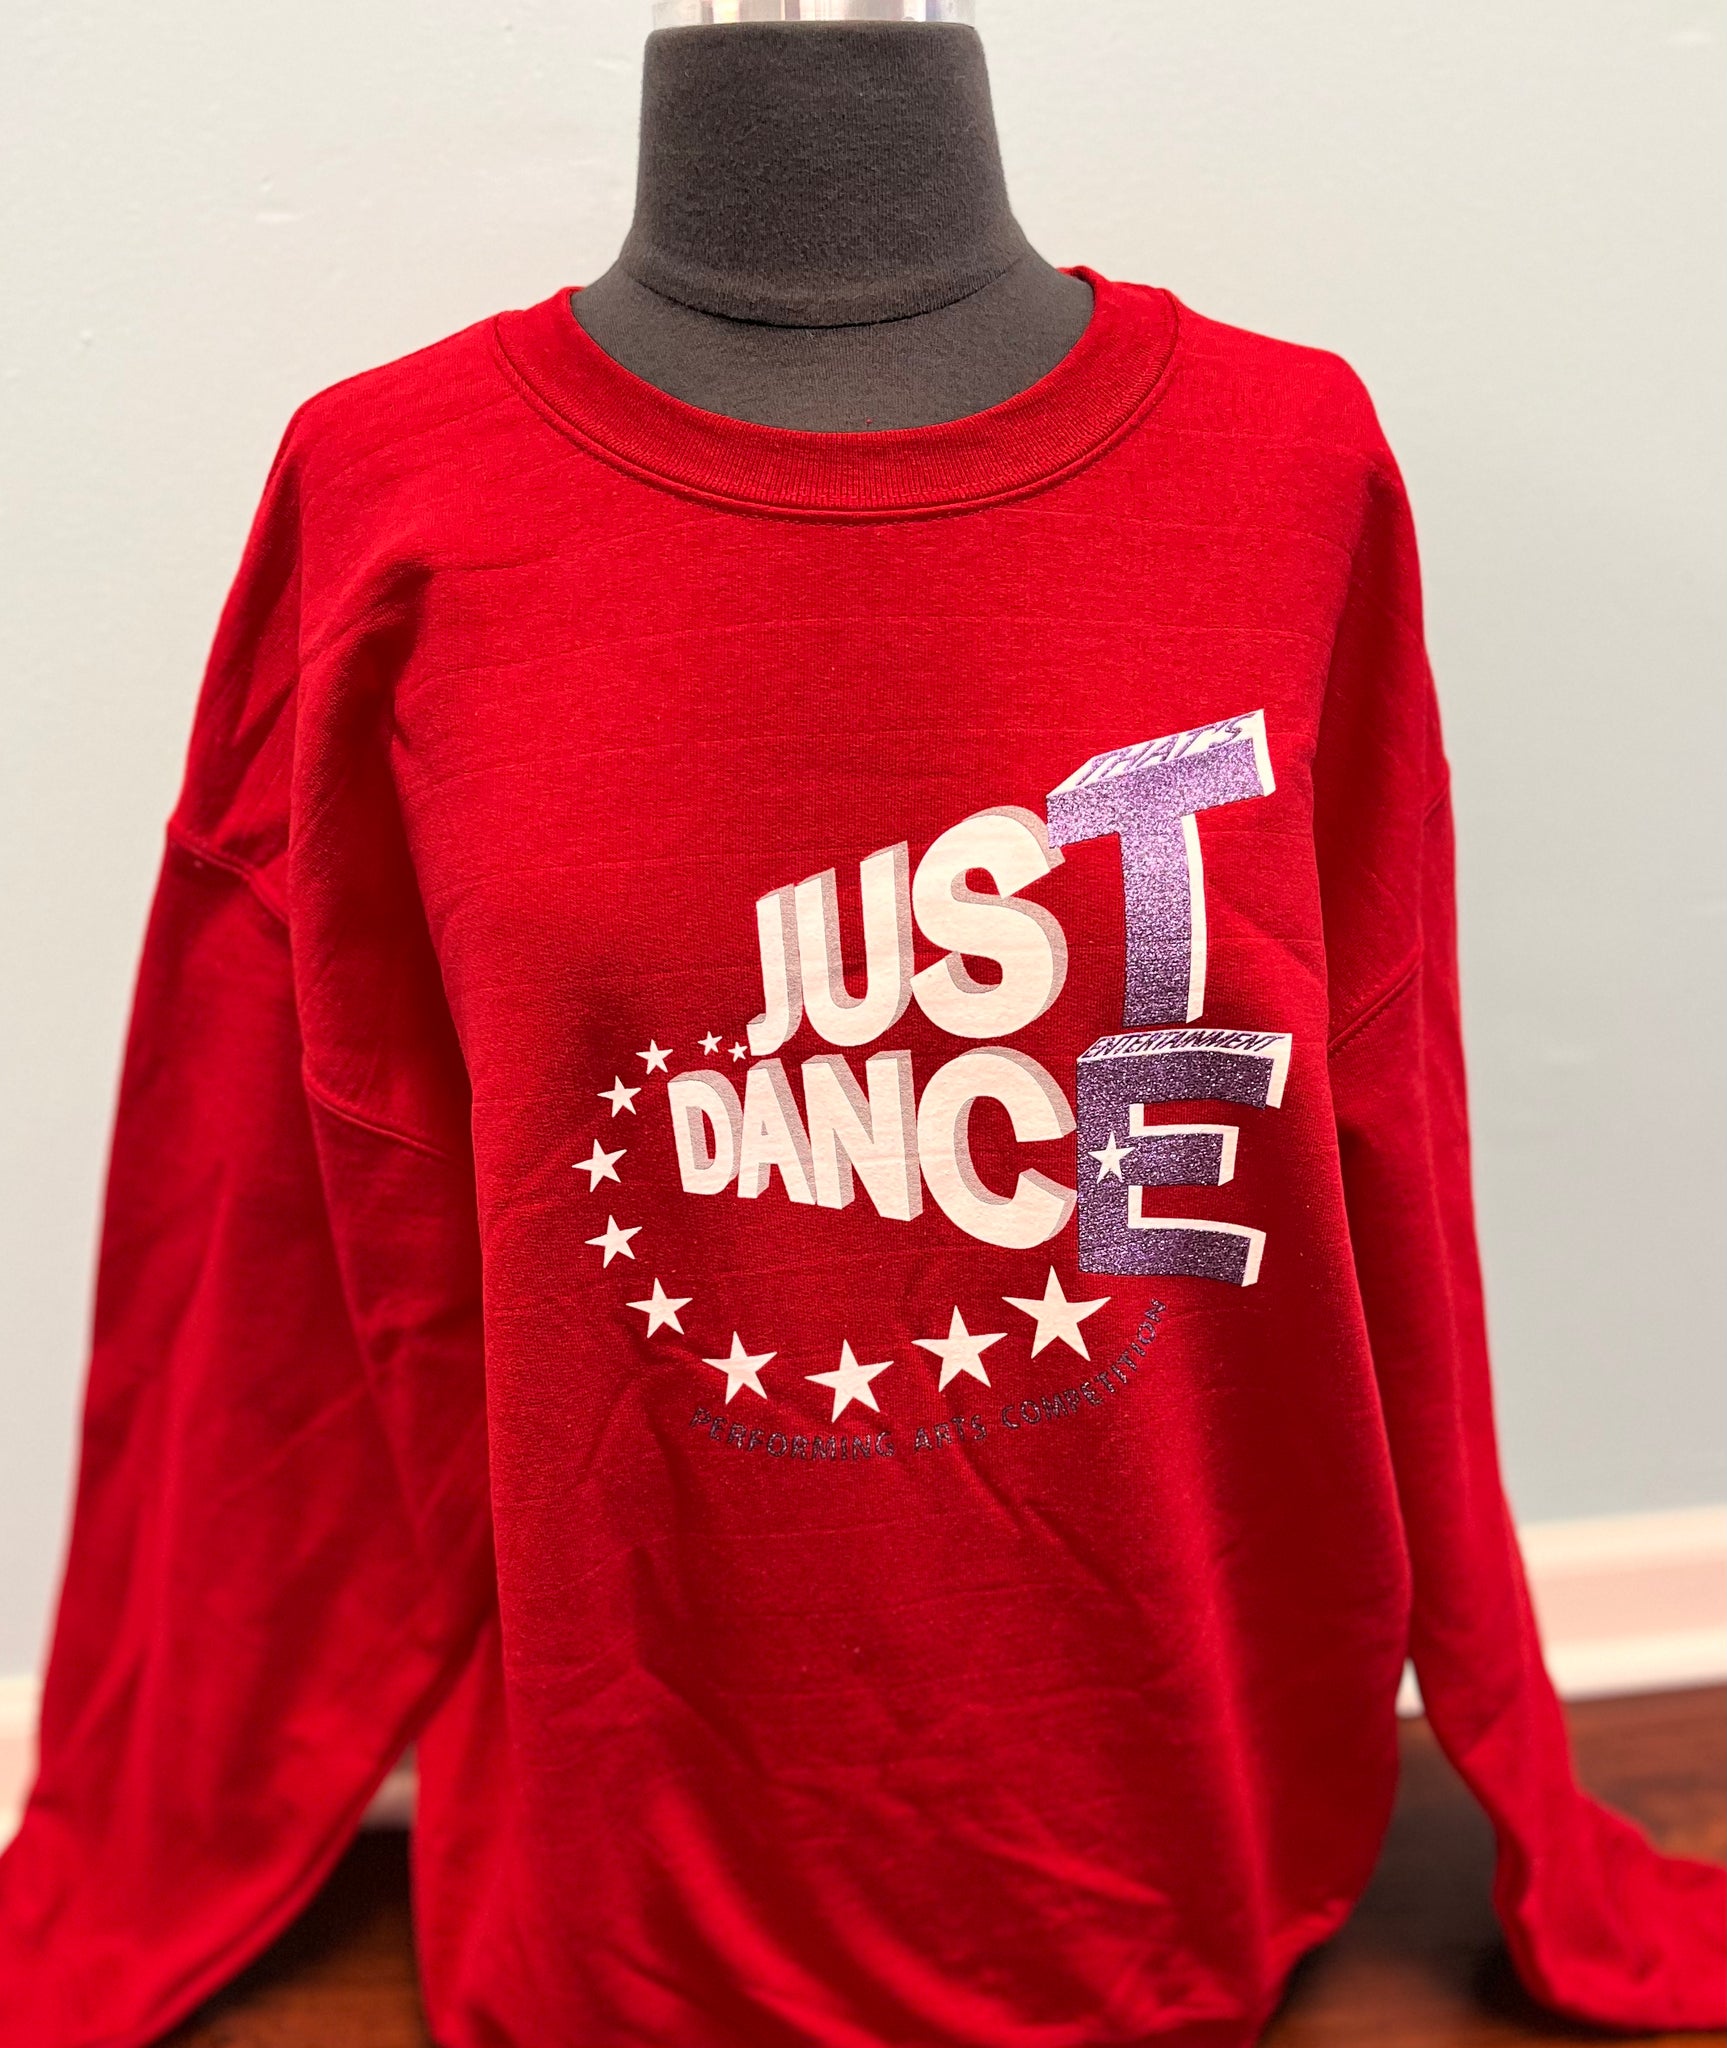 TE Just Dance Sweatshirt Red with Purple Sparkles